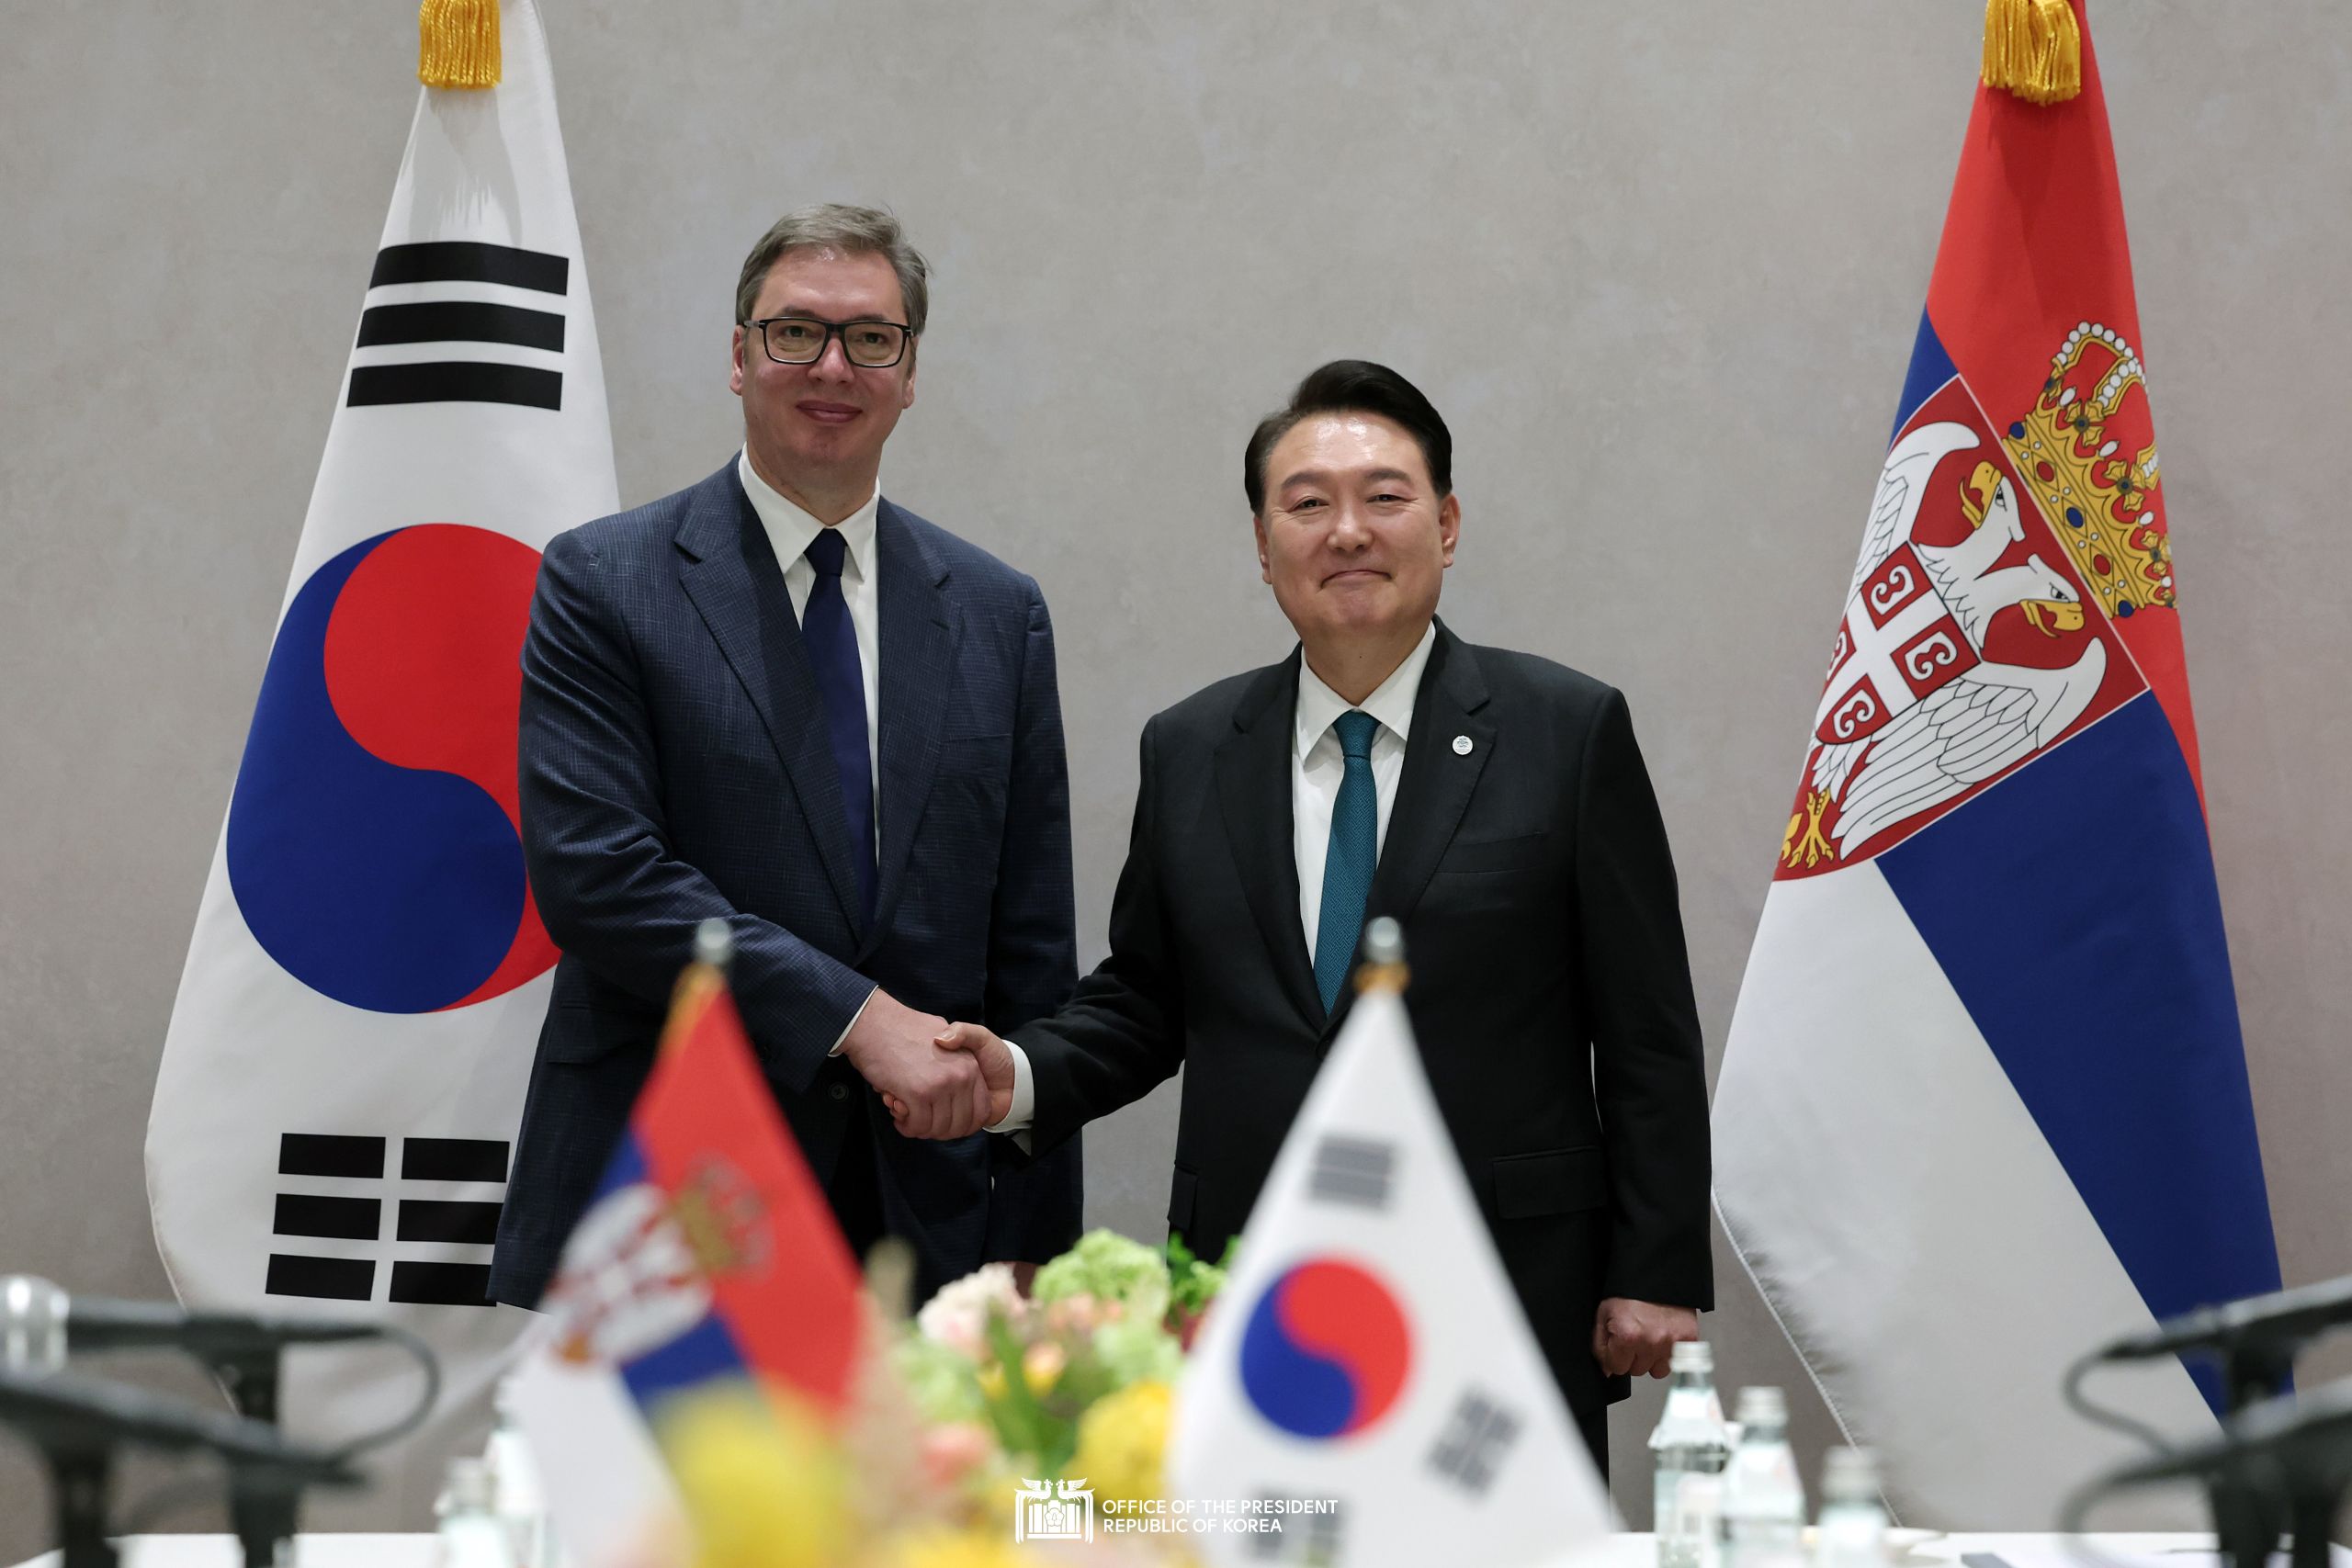 Korea-Serbia Summit in New York slide 1